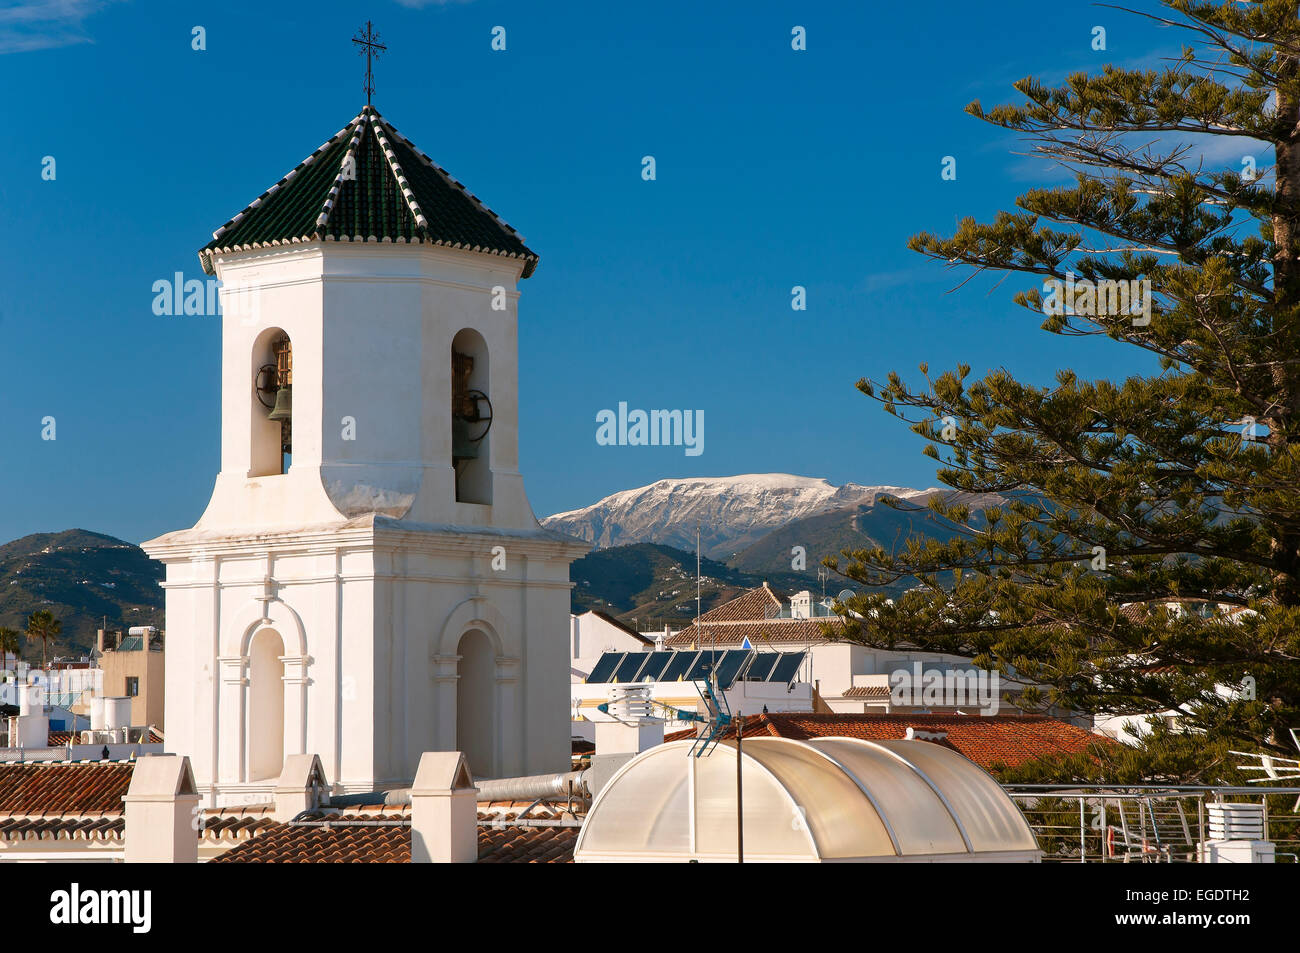 El Salvador church, Nerja, Malaga province, Region of Andalusia, Spain, Europe Stock Photo